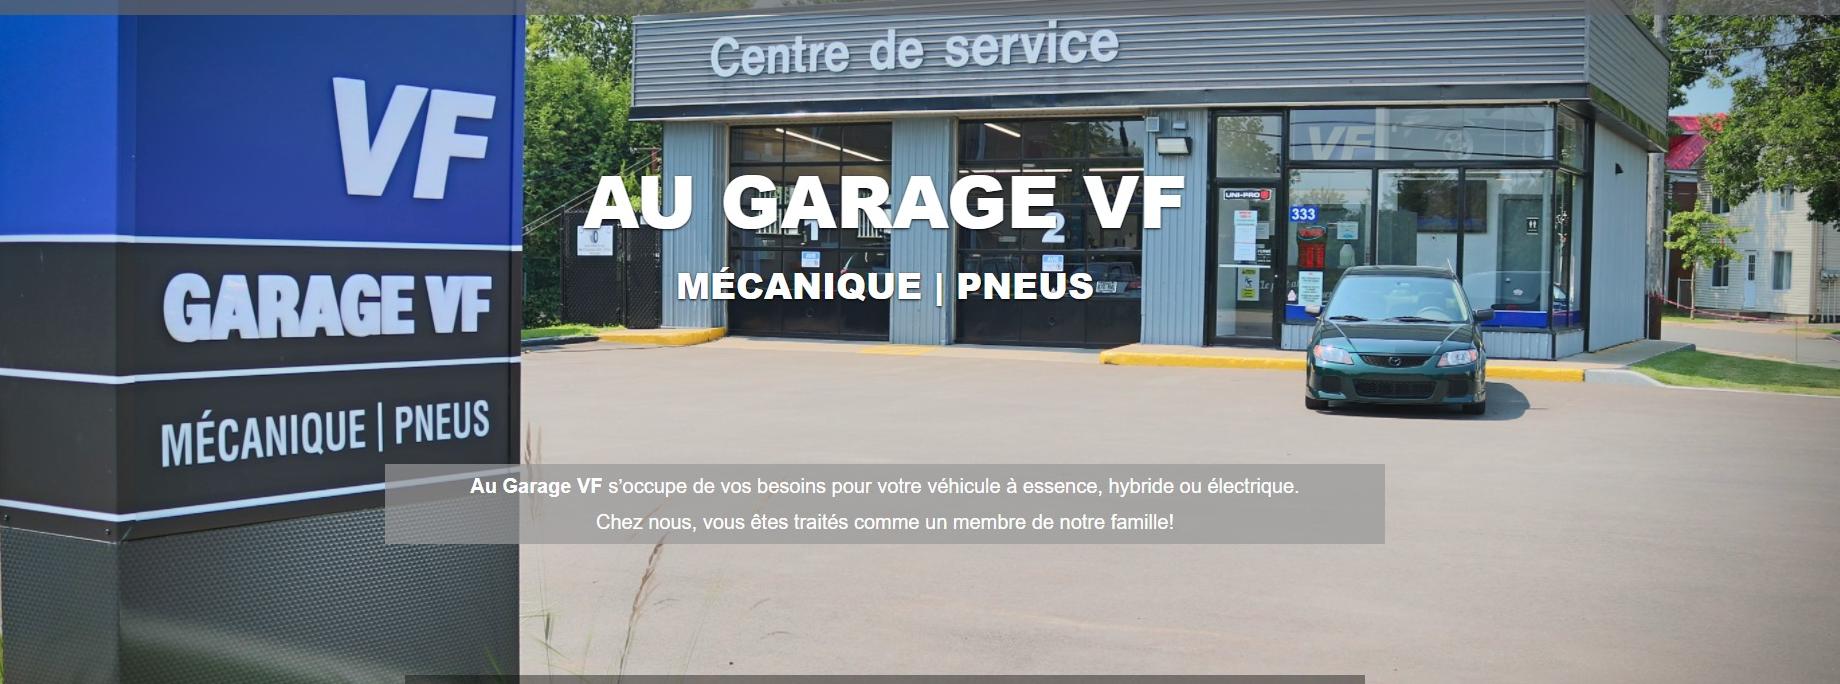 Garage VF - Atelier Reparation Automobile